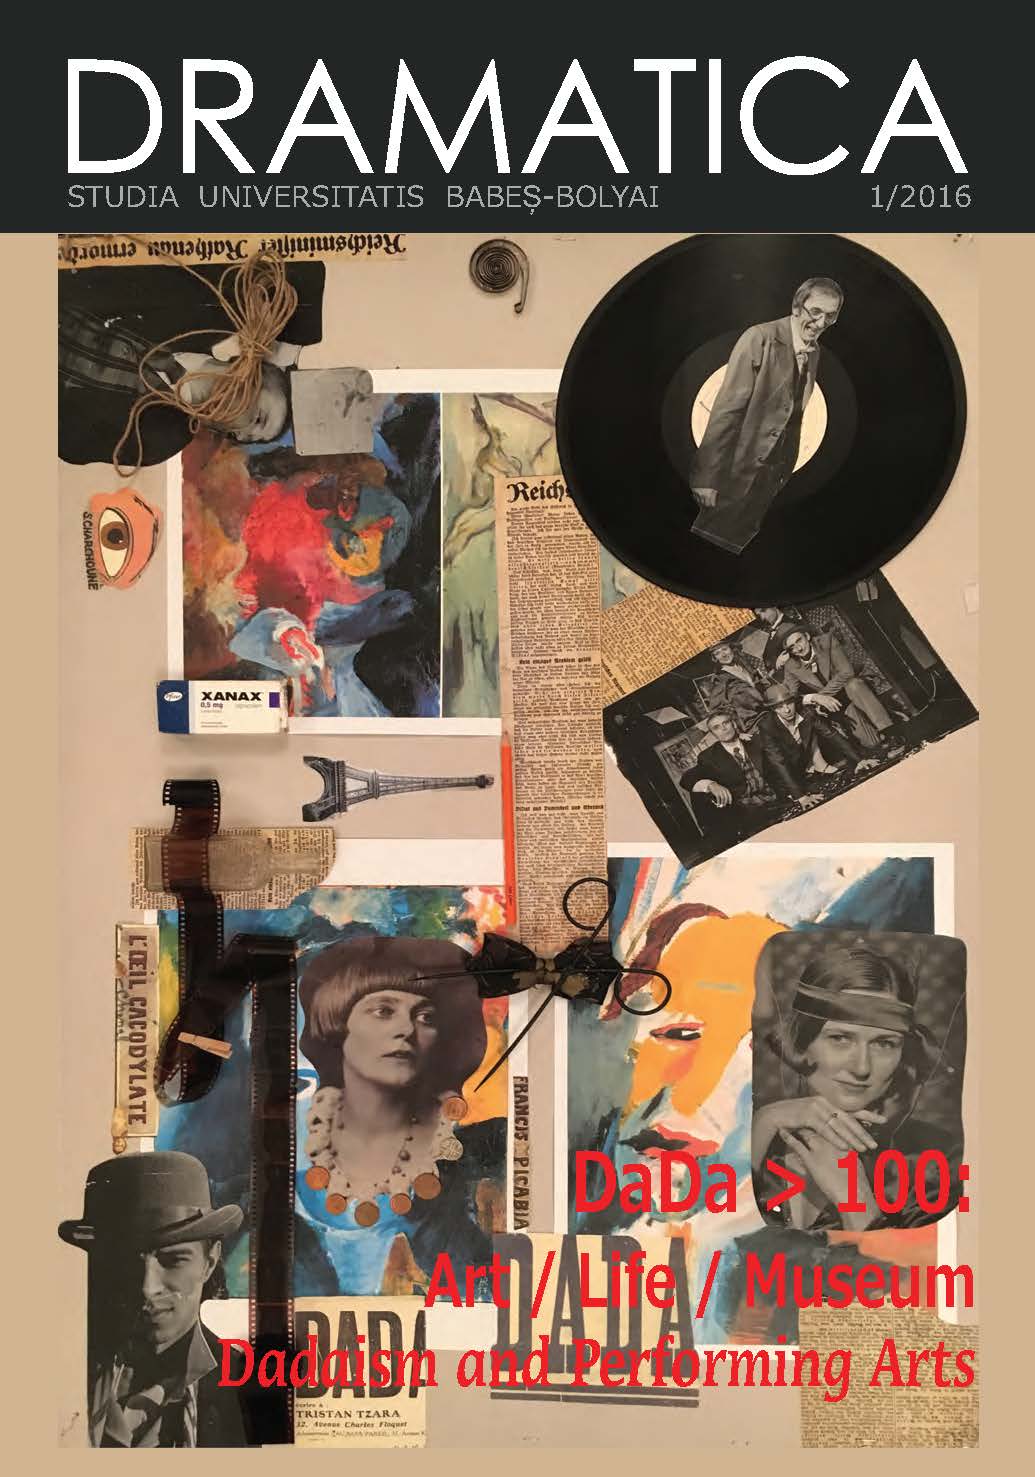 					View Vol. 61 No. 1 (2016): DADA > 100: Life / Art / Museum. DADAISM AND PERFORMING ARTS
				